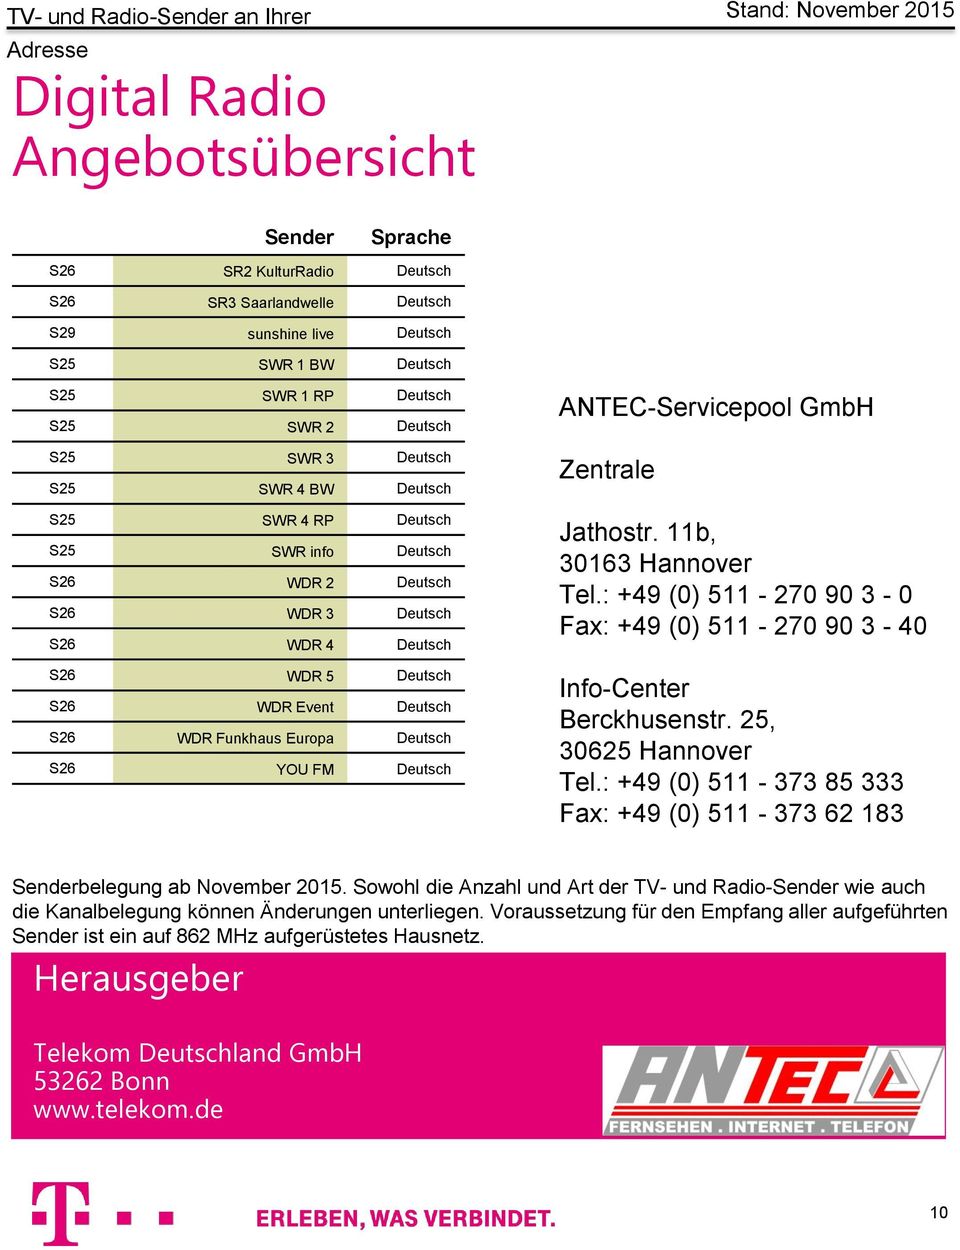 S26 YOU FM Deutsch ANTEC-Servicepool GmbH Zentrale Jathostr. 11b, 30163 Hannover Tel.: +49 (0) 511-270 90 3-0 Fax: +49 (0) 511-270 90 3-40 Info-Center Berckhusenstr. 25, 30625 Hannover Tel.